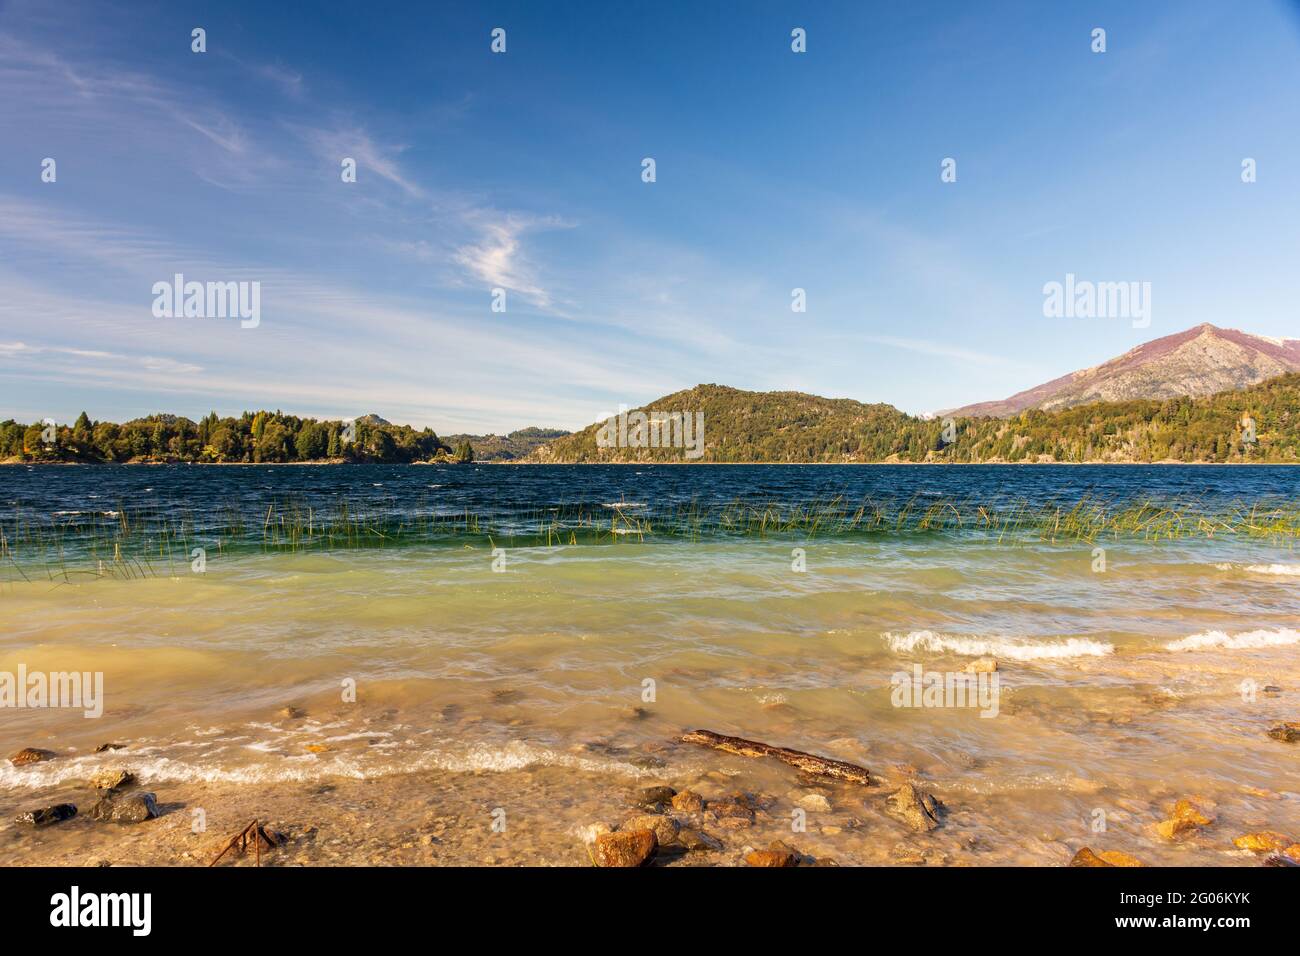 Beautiful shot of the Lago Moreno lake near trees in Nahuel Huapi National Park, Argentina Stock Photo